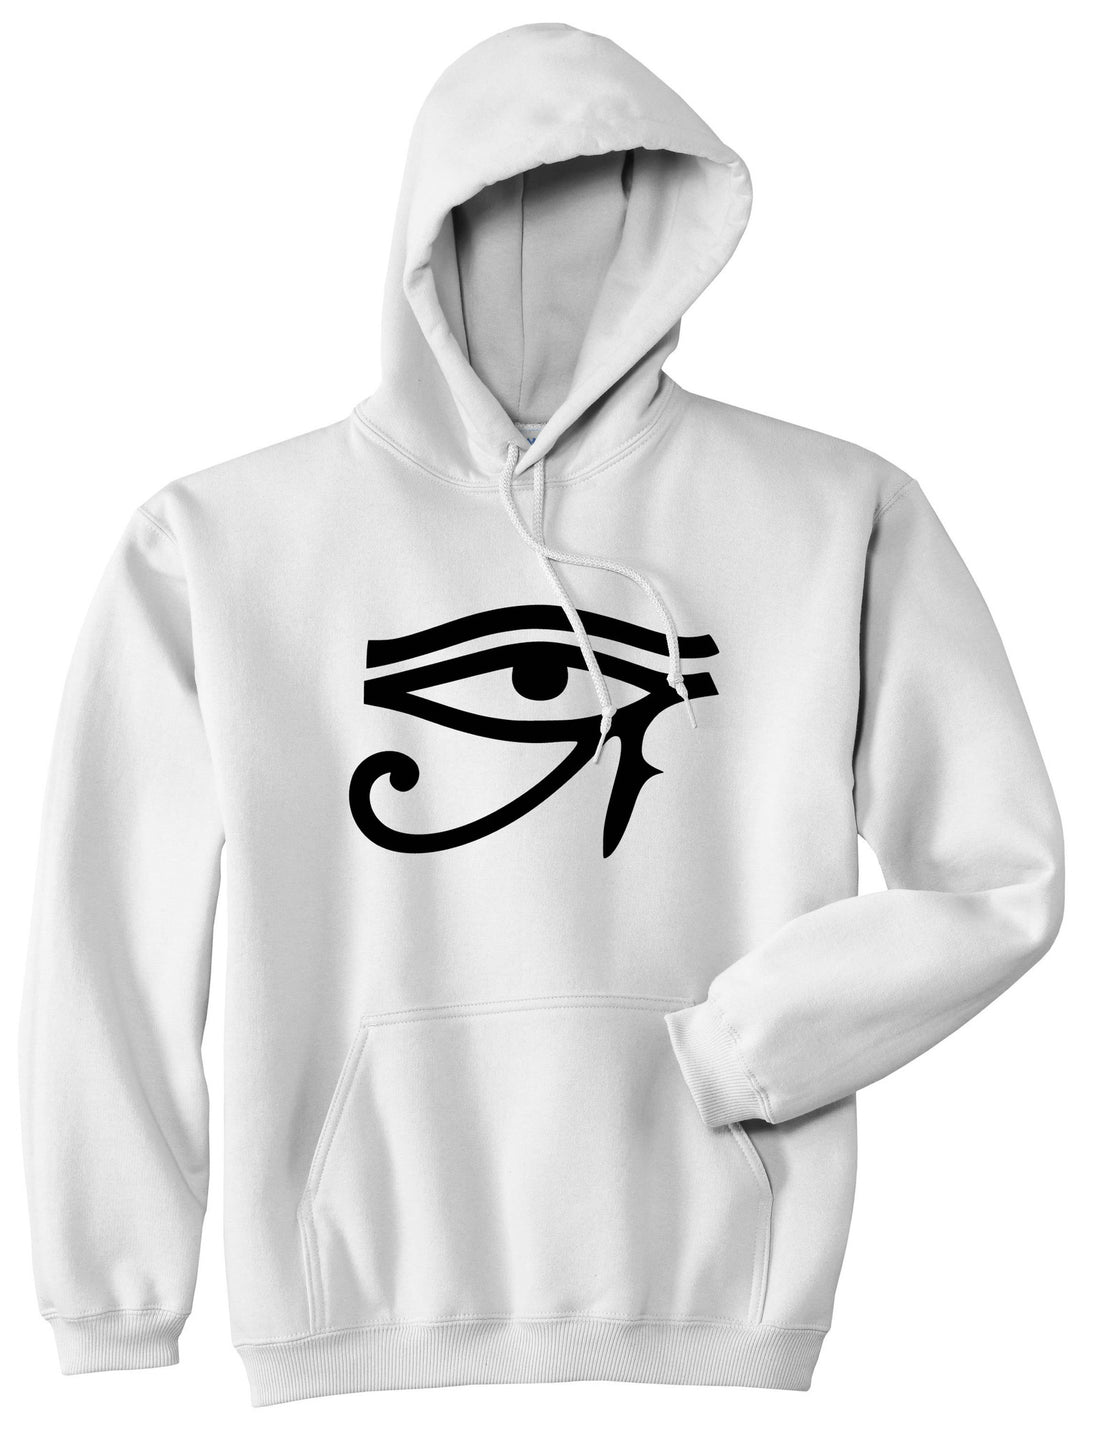 Eye of Horus Egyptian Pullover Hoodie Hoody by Kings Of NY